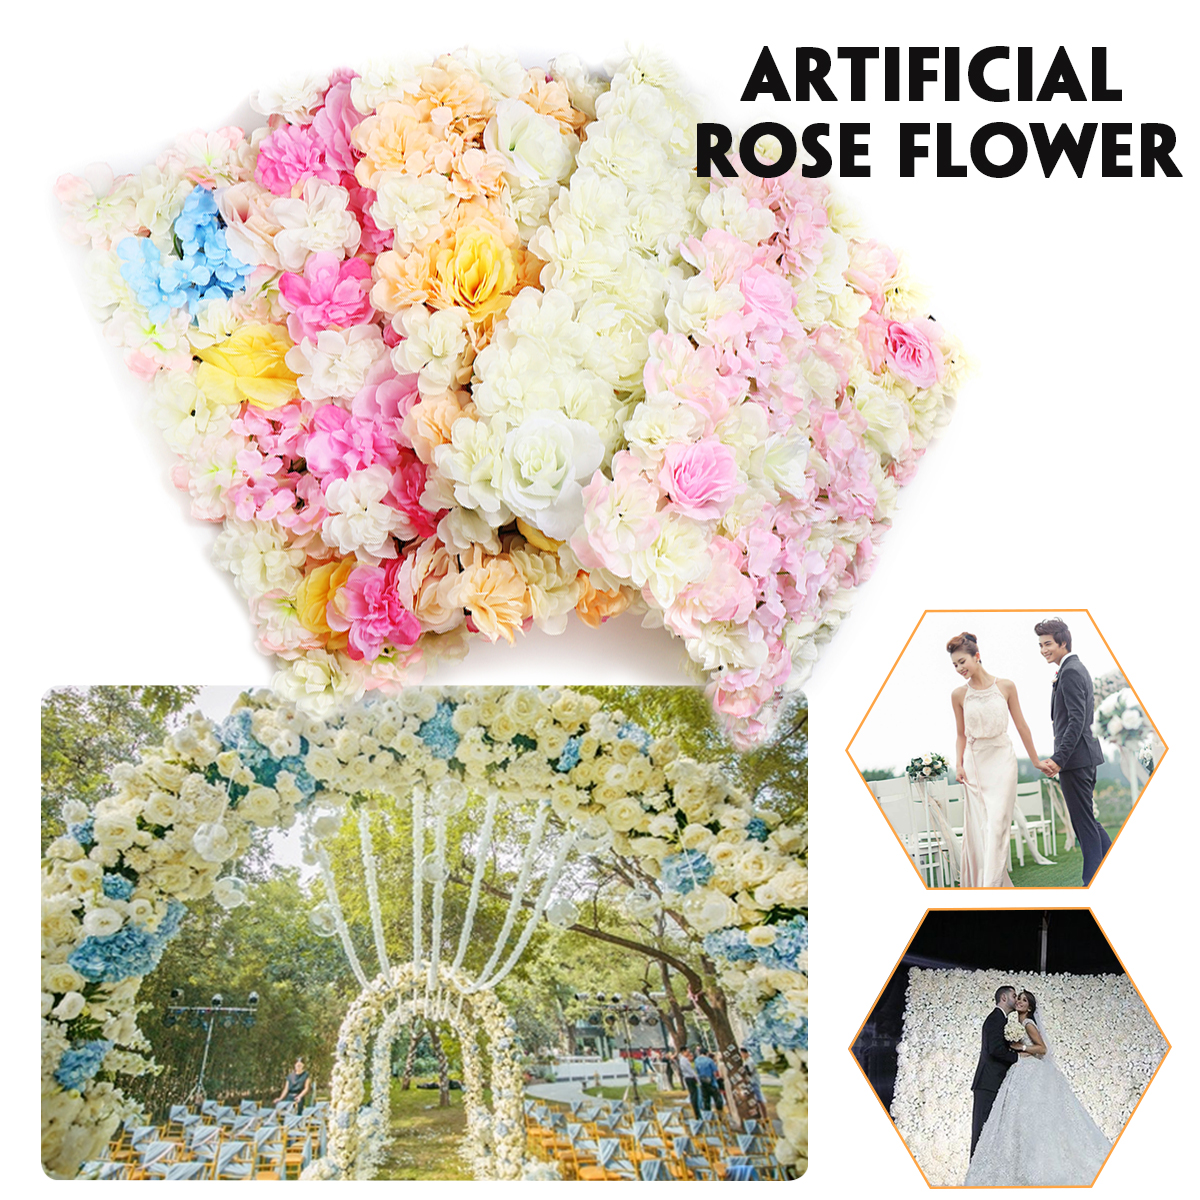 DIY-Artificia-Wedding-Rose-Flower-Panel-Backdrop-Wall-Road-Arch-Decorations-1632758-1